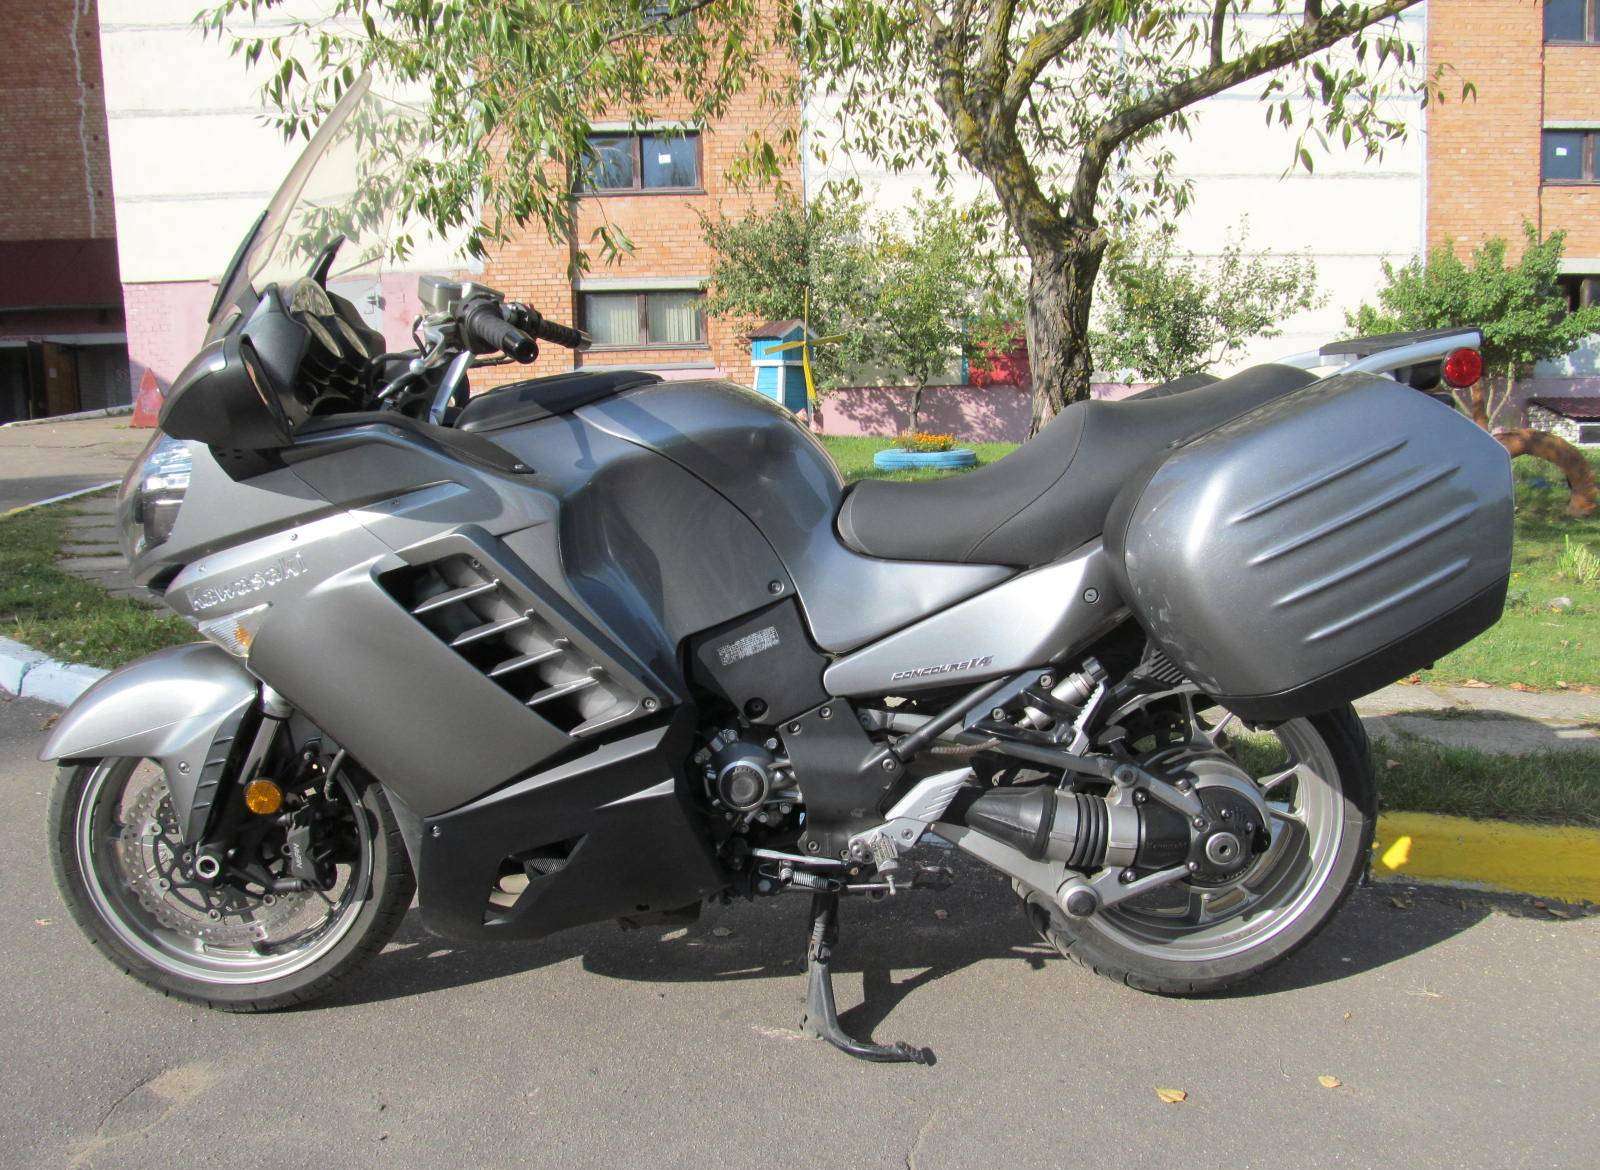 Купить мотоцикл Kawasaki Concours в Беларуси в кредит - цены, характеристики, фото. в Беларуси в кредит